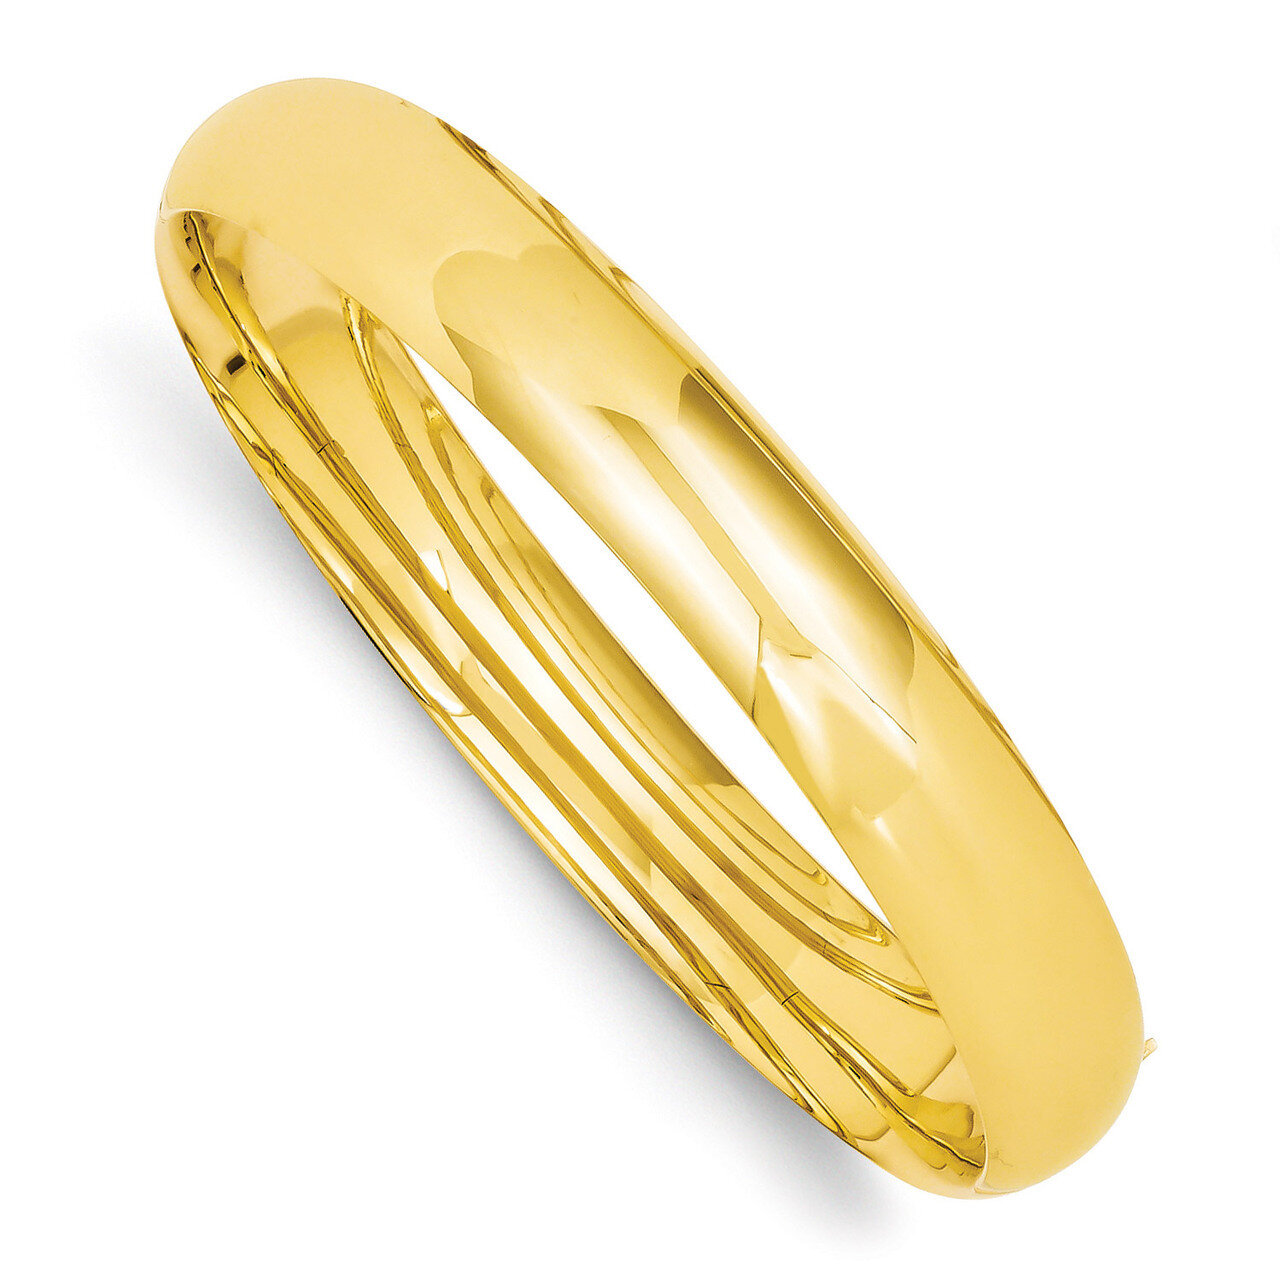 7/16 High Polished Hinged Bangle Bracelet 14k Gold HP7/16